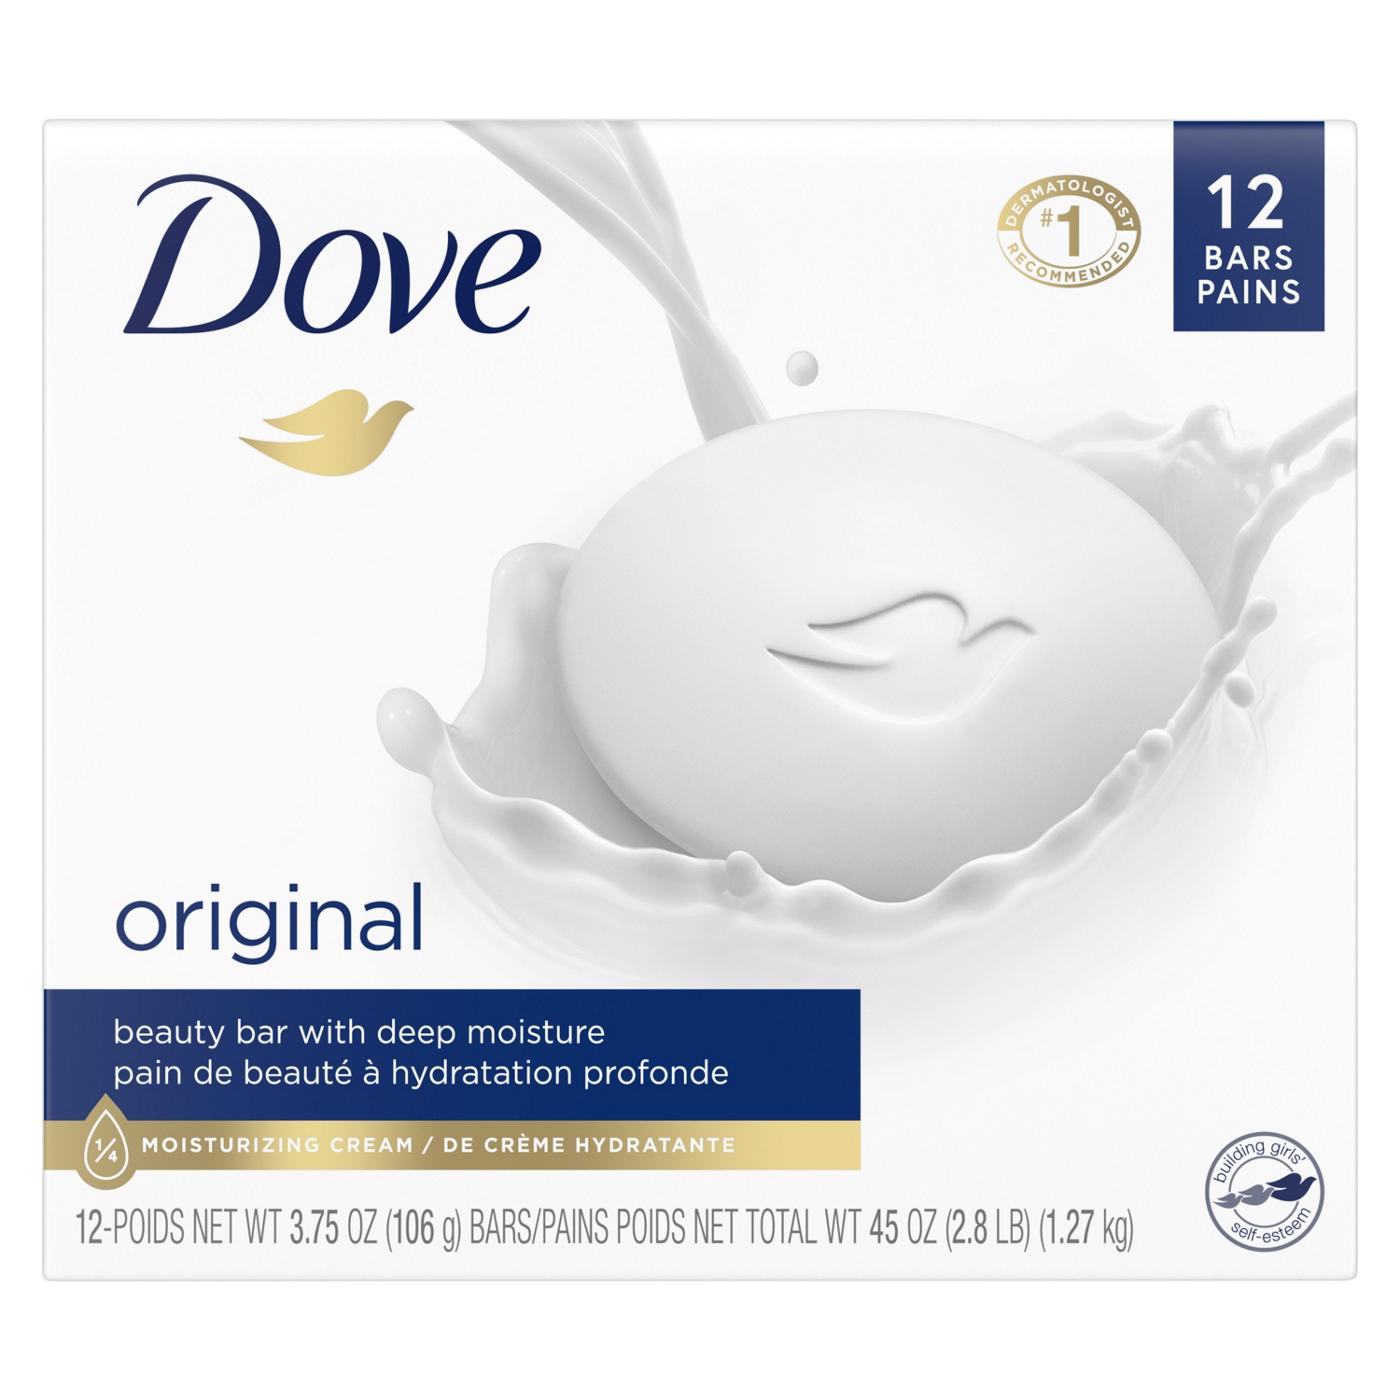 Dove Beauty Bar - Original; image 1 of 3